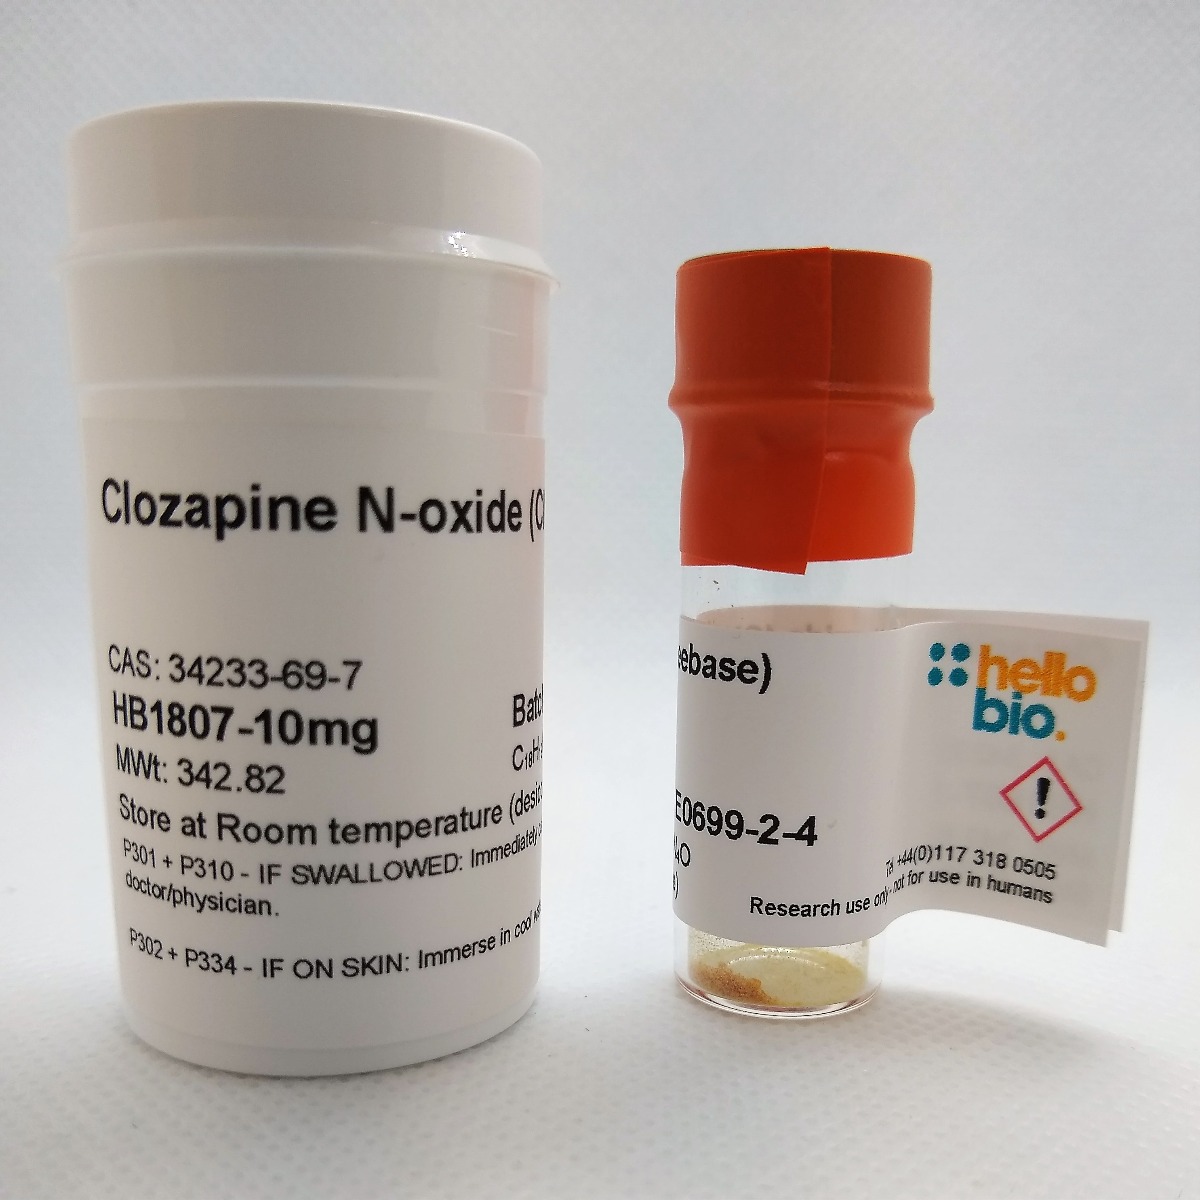 Clozapine N-oxide (CNO) (freebase) product vial image | Hello Bio